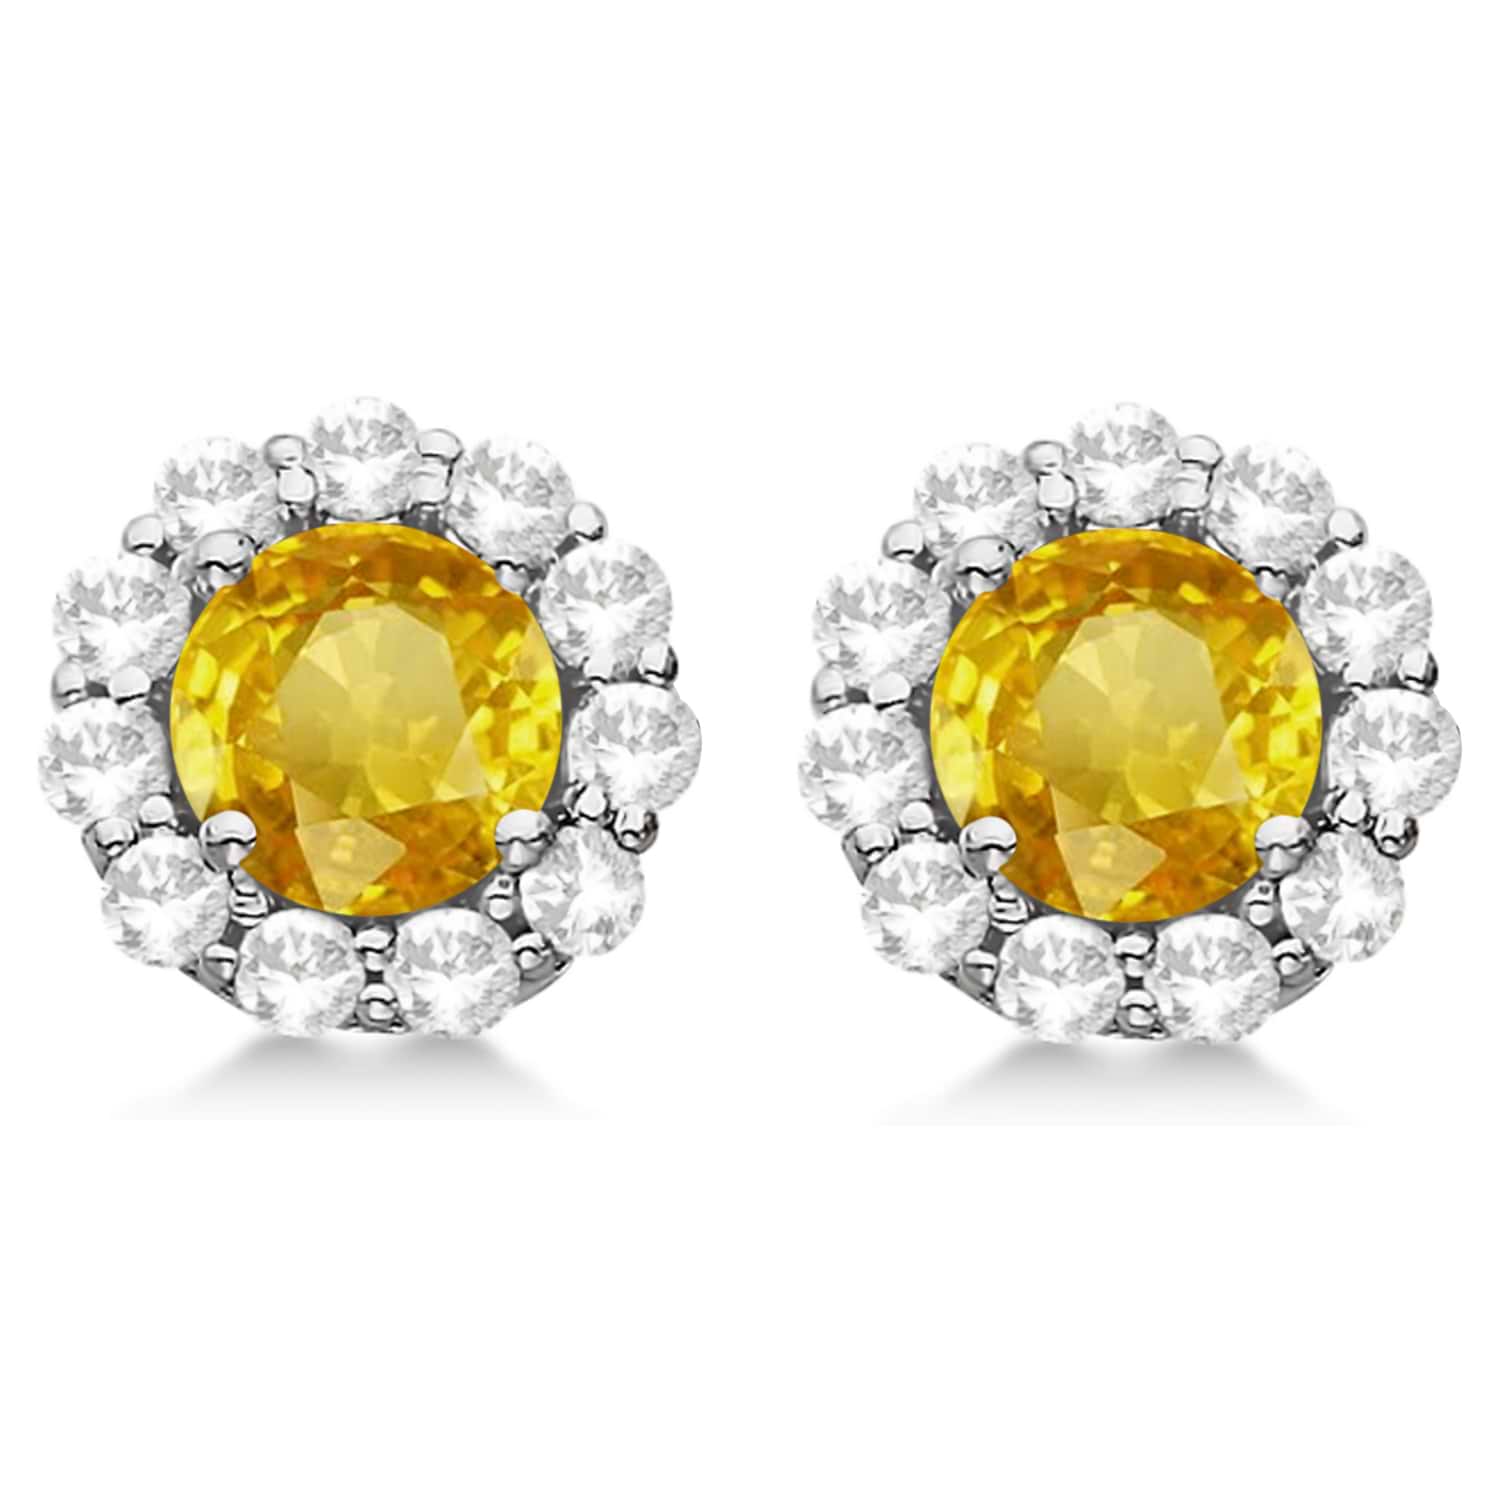 Halo Yellow Sapphire & Diamond Stud Earrings 14kt White Gold 2.62ct.